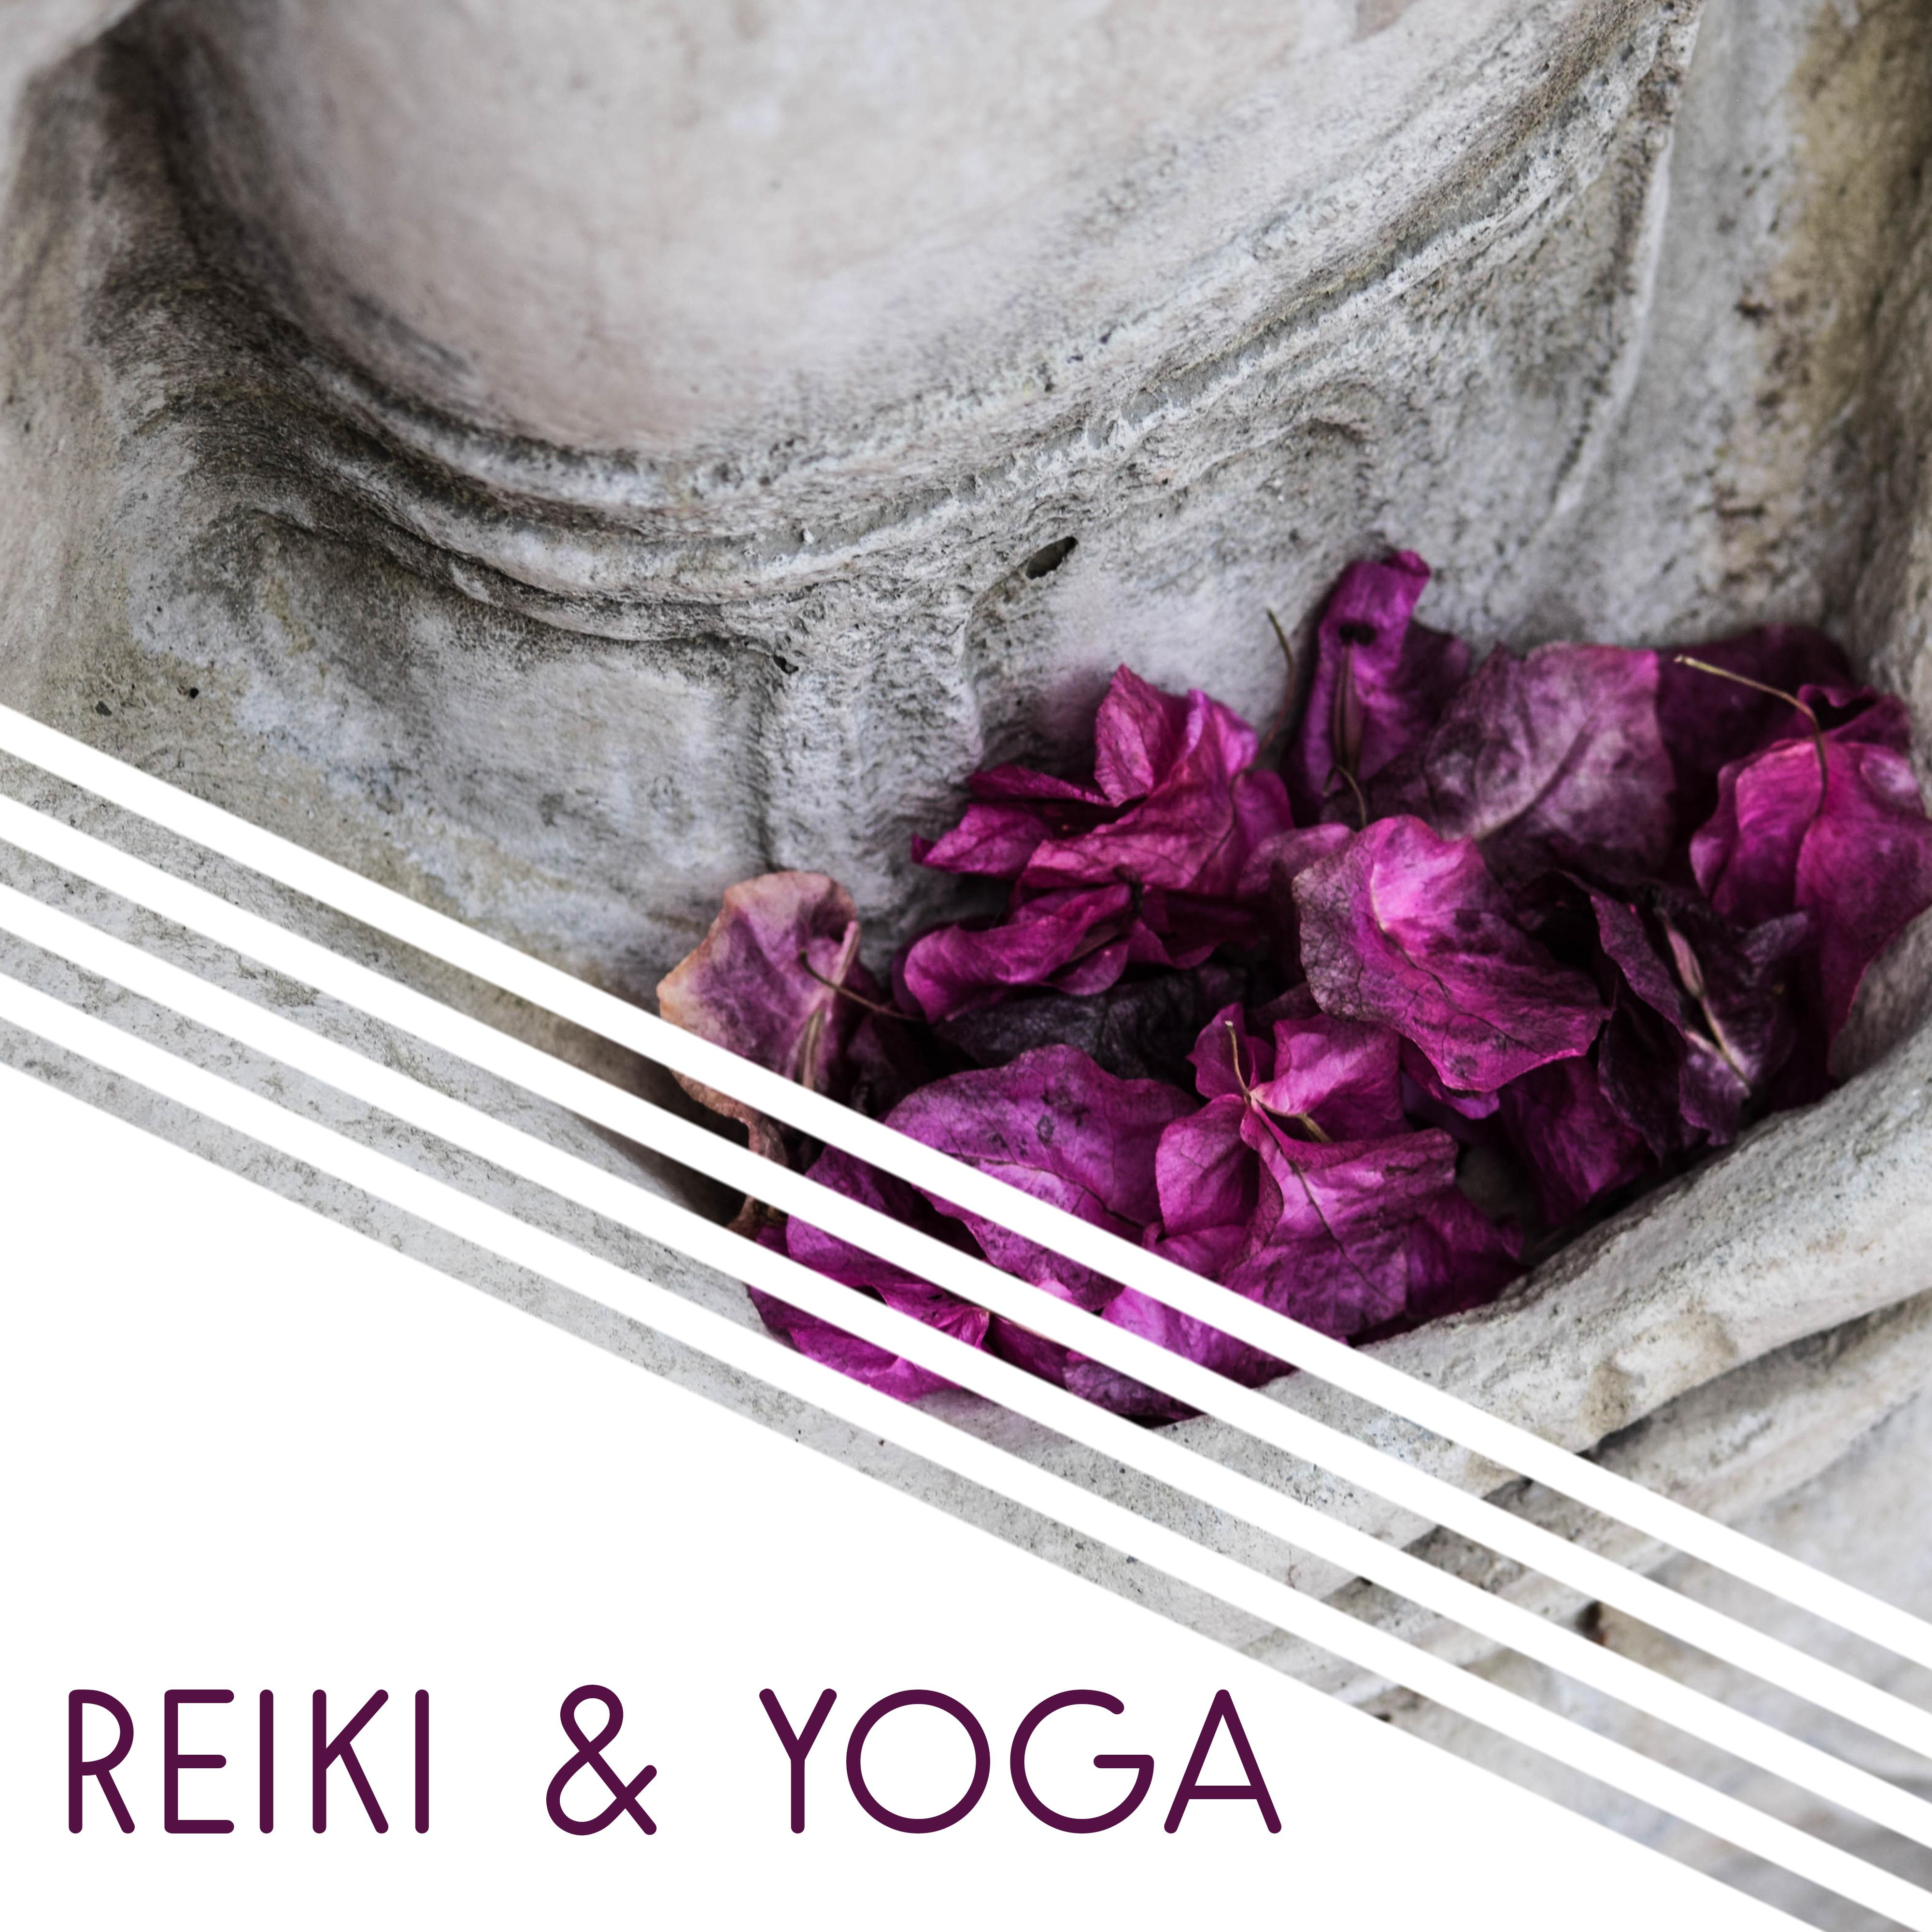 Reiki & Yoga – Peaceful Music for Meditation, Yoga Dream, Buddha Lounge, Zen, Relaxation, Pure Mind, Exercise Yoga